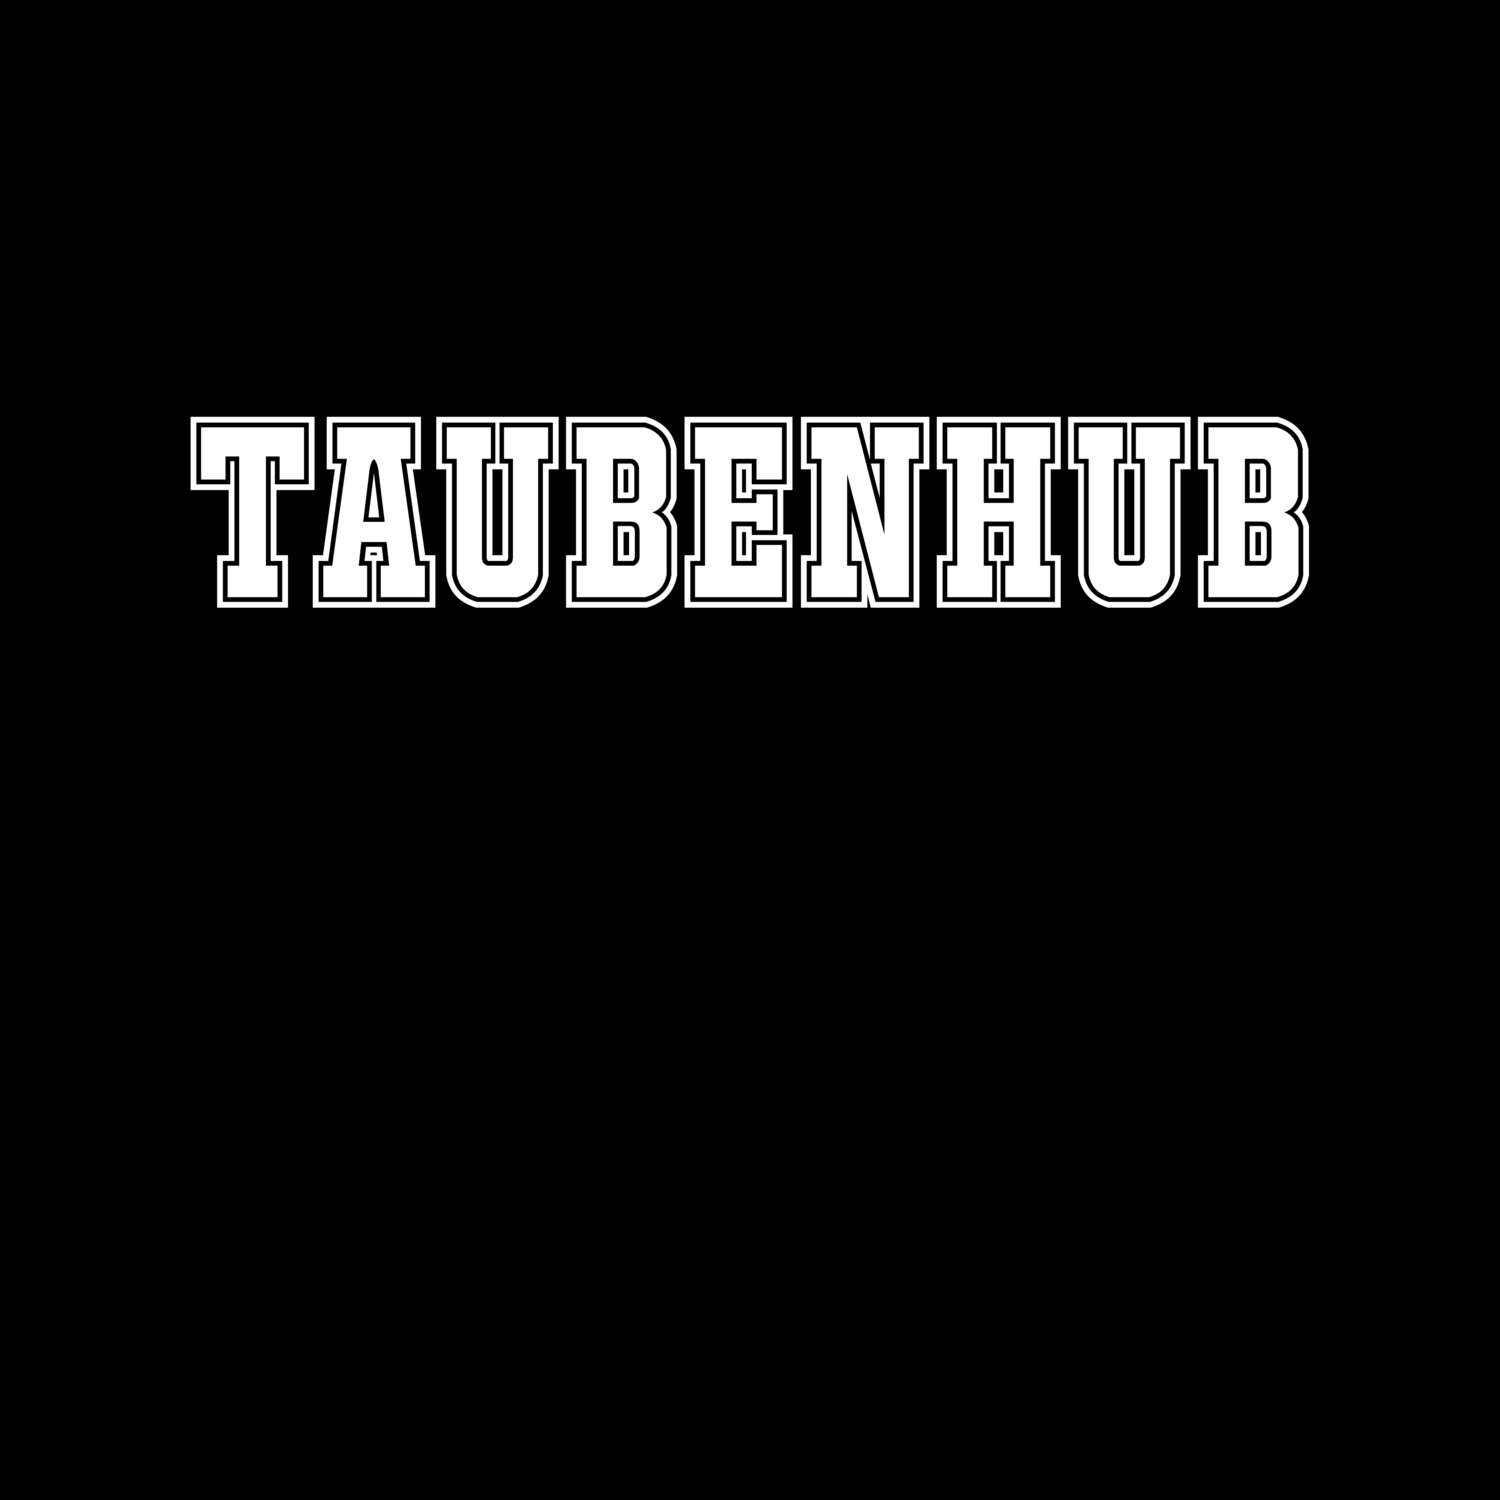 Taubenhub T-Shirt »Classic«